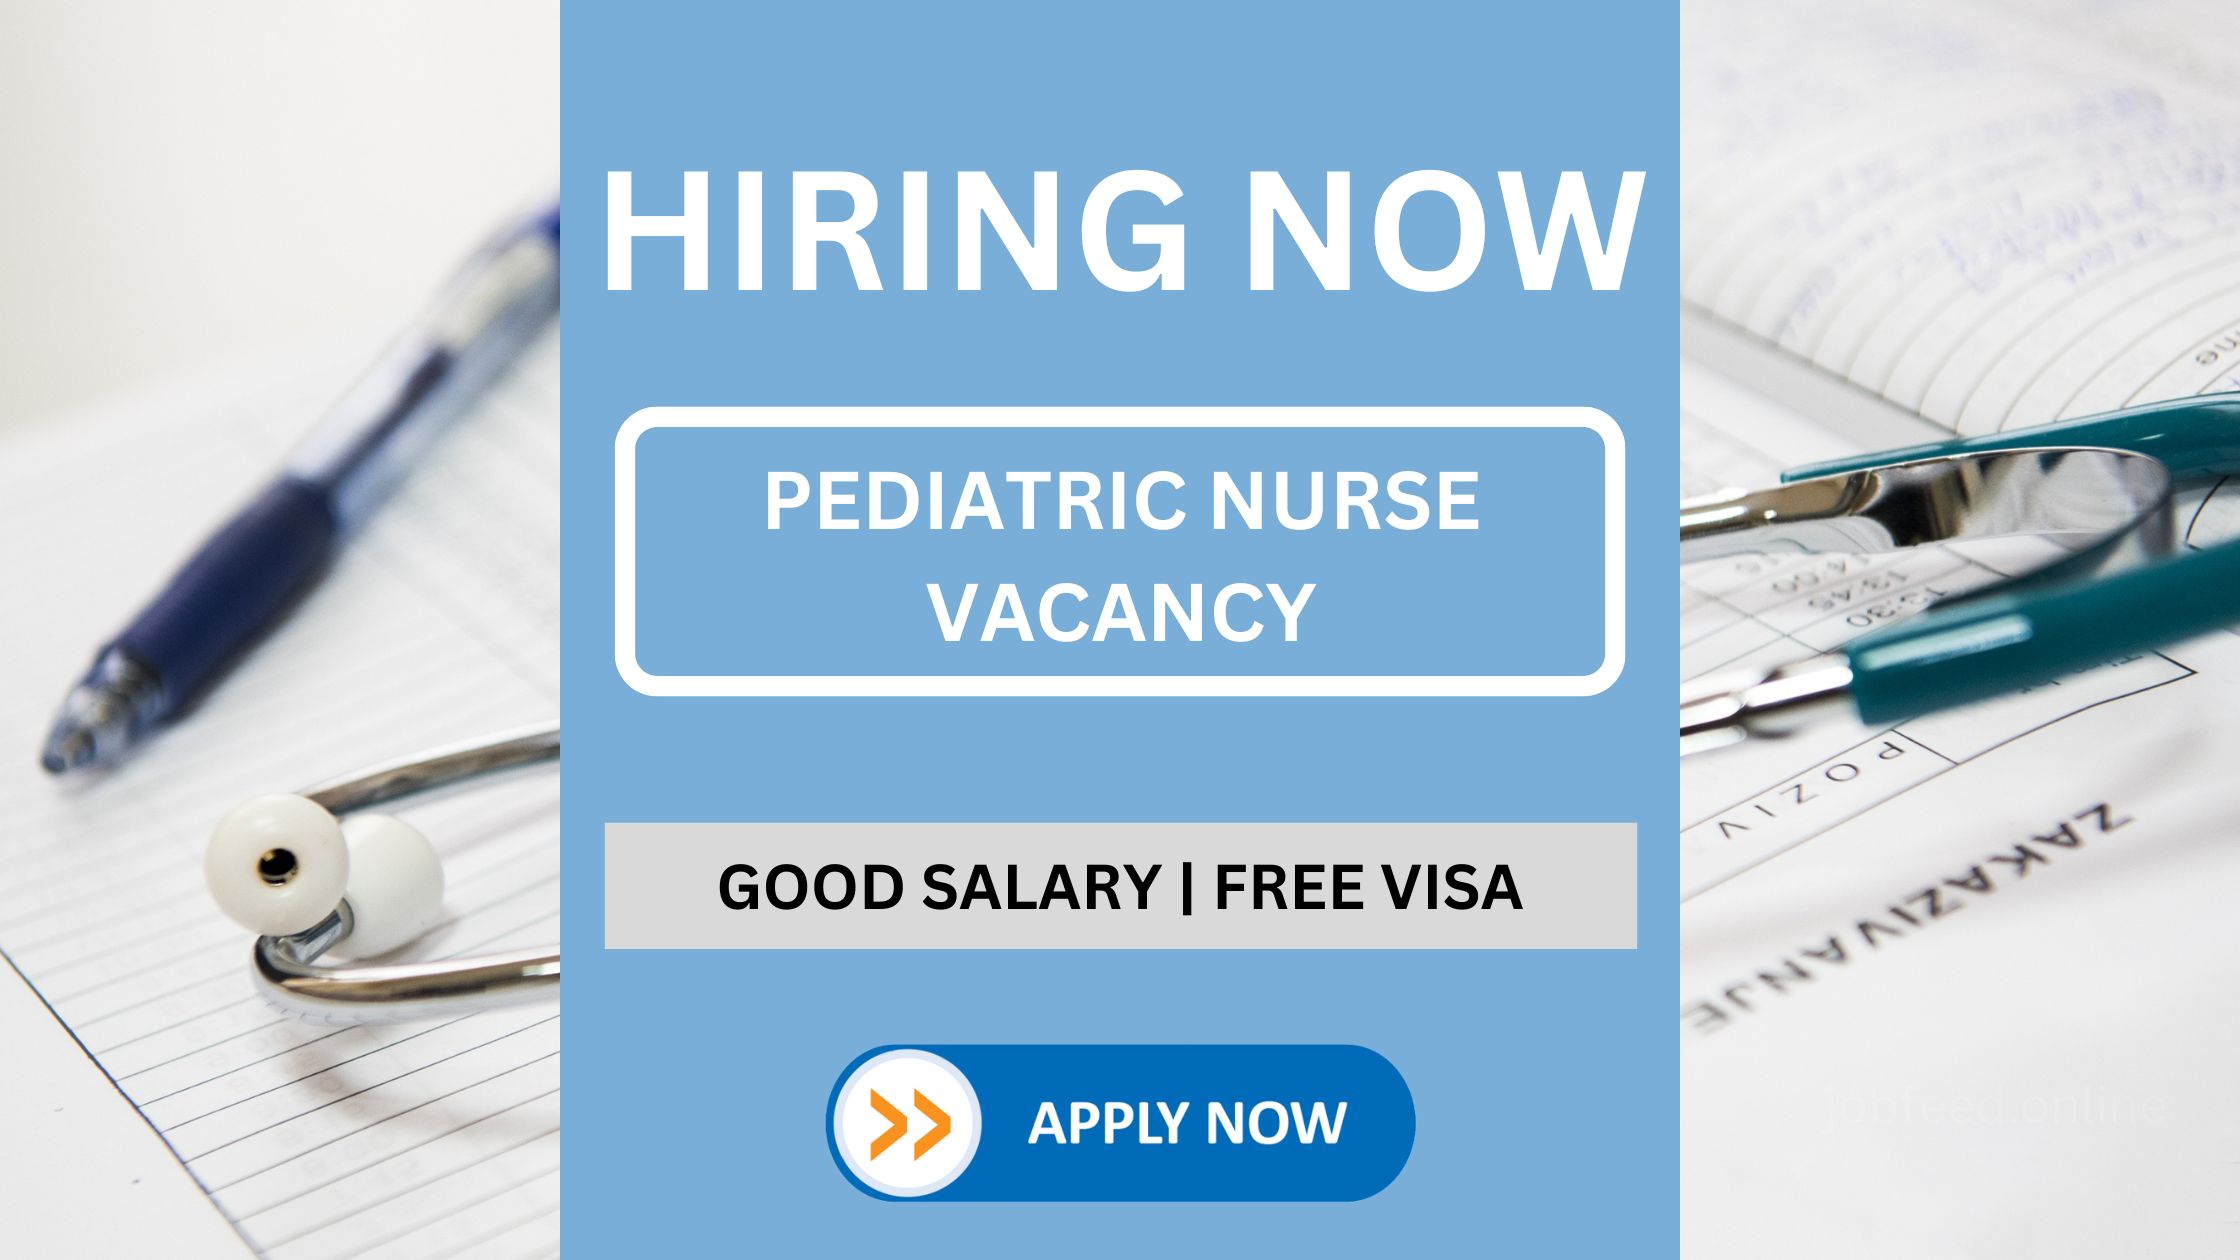 Pediatric Nurse Vacancy - Free visa and good salary